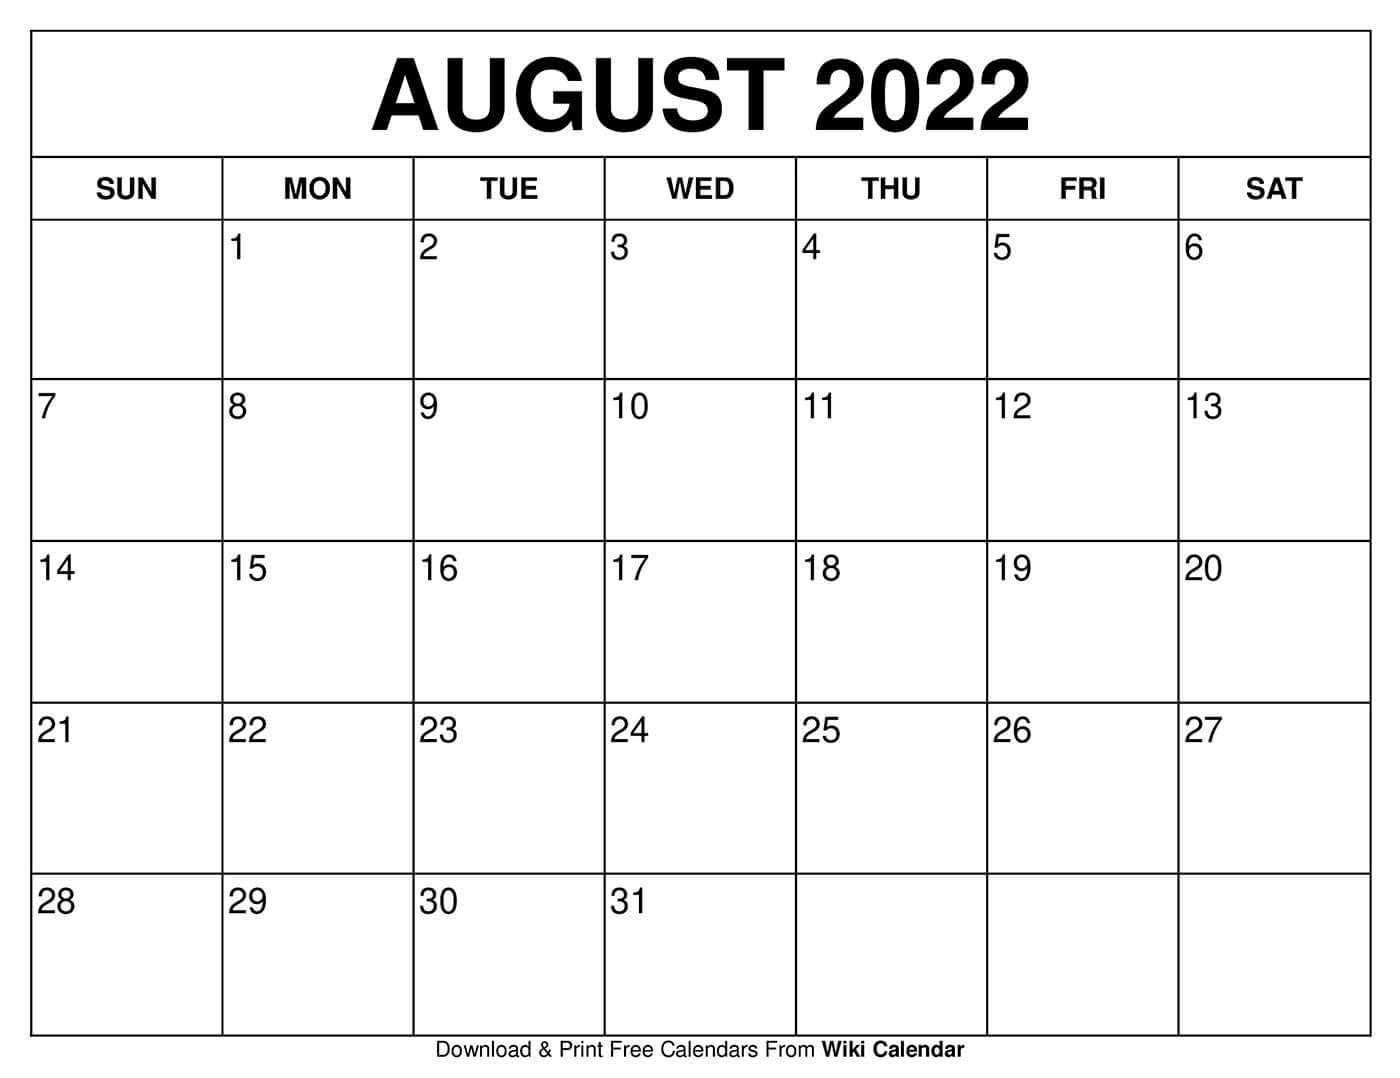 Print Calendar August 2022 Free Printable August 2022 Calendars - Wiki Calendar